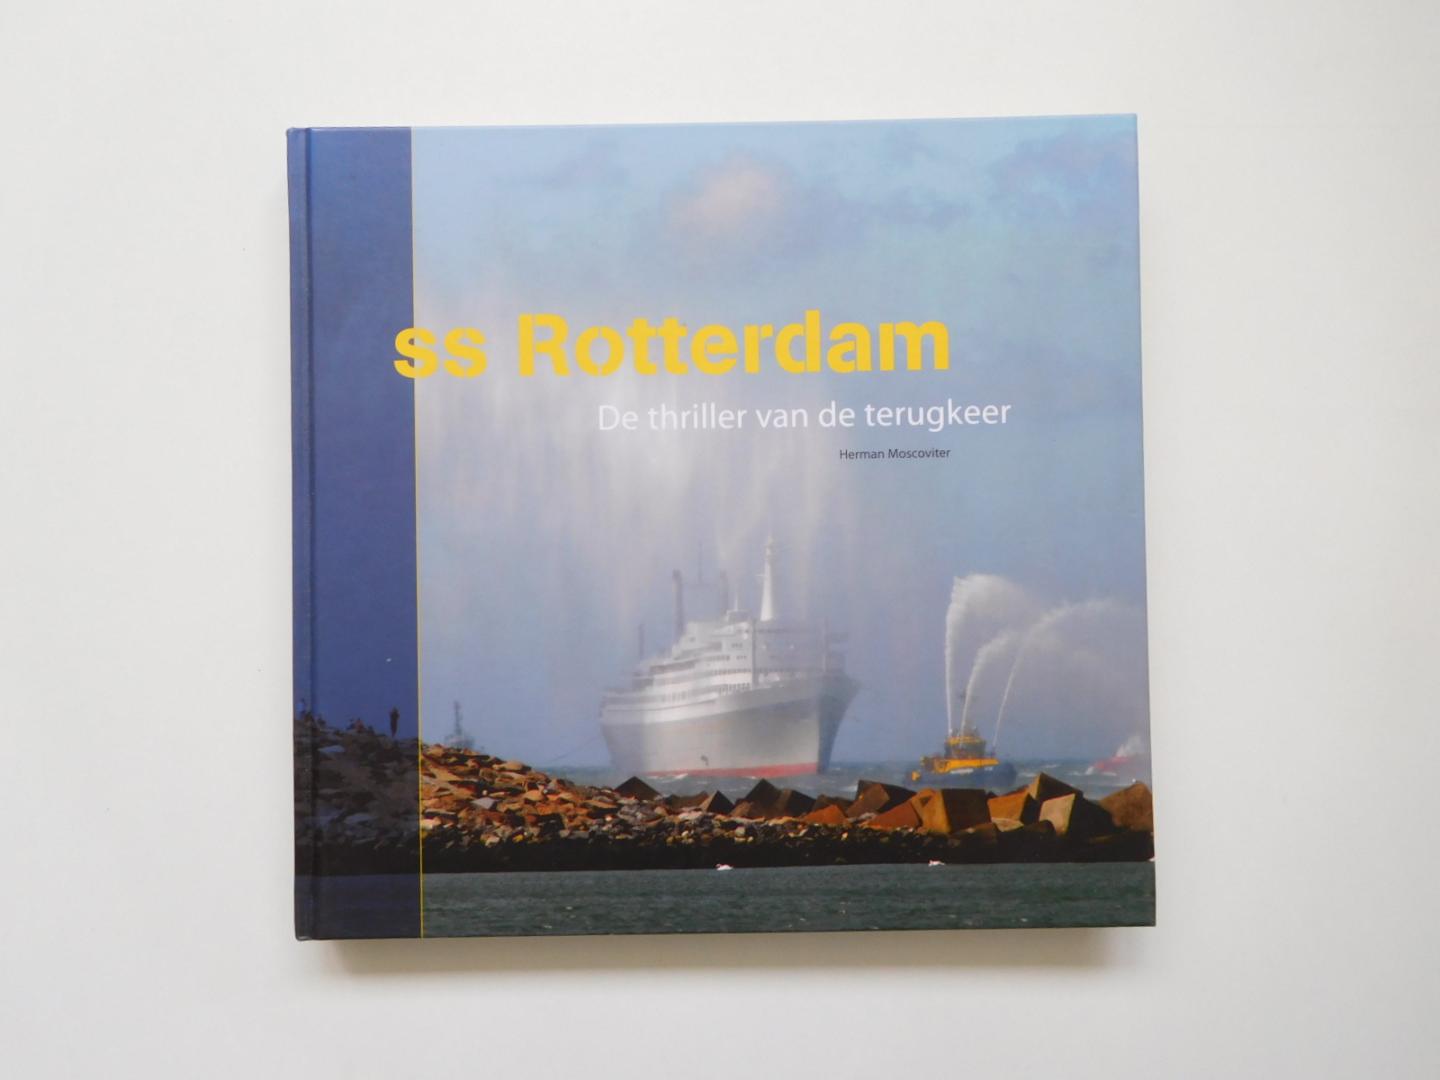 Moscoviter, Herman - SS Rotterdam, de thriller van ene terugkeer